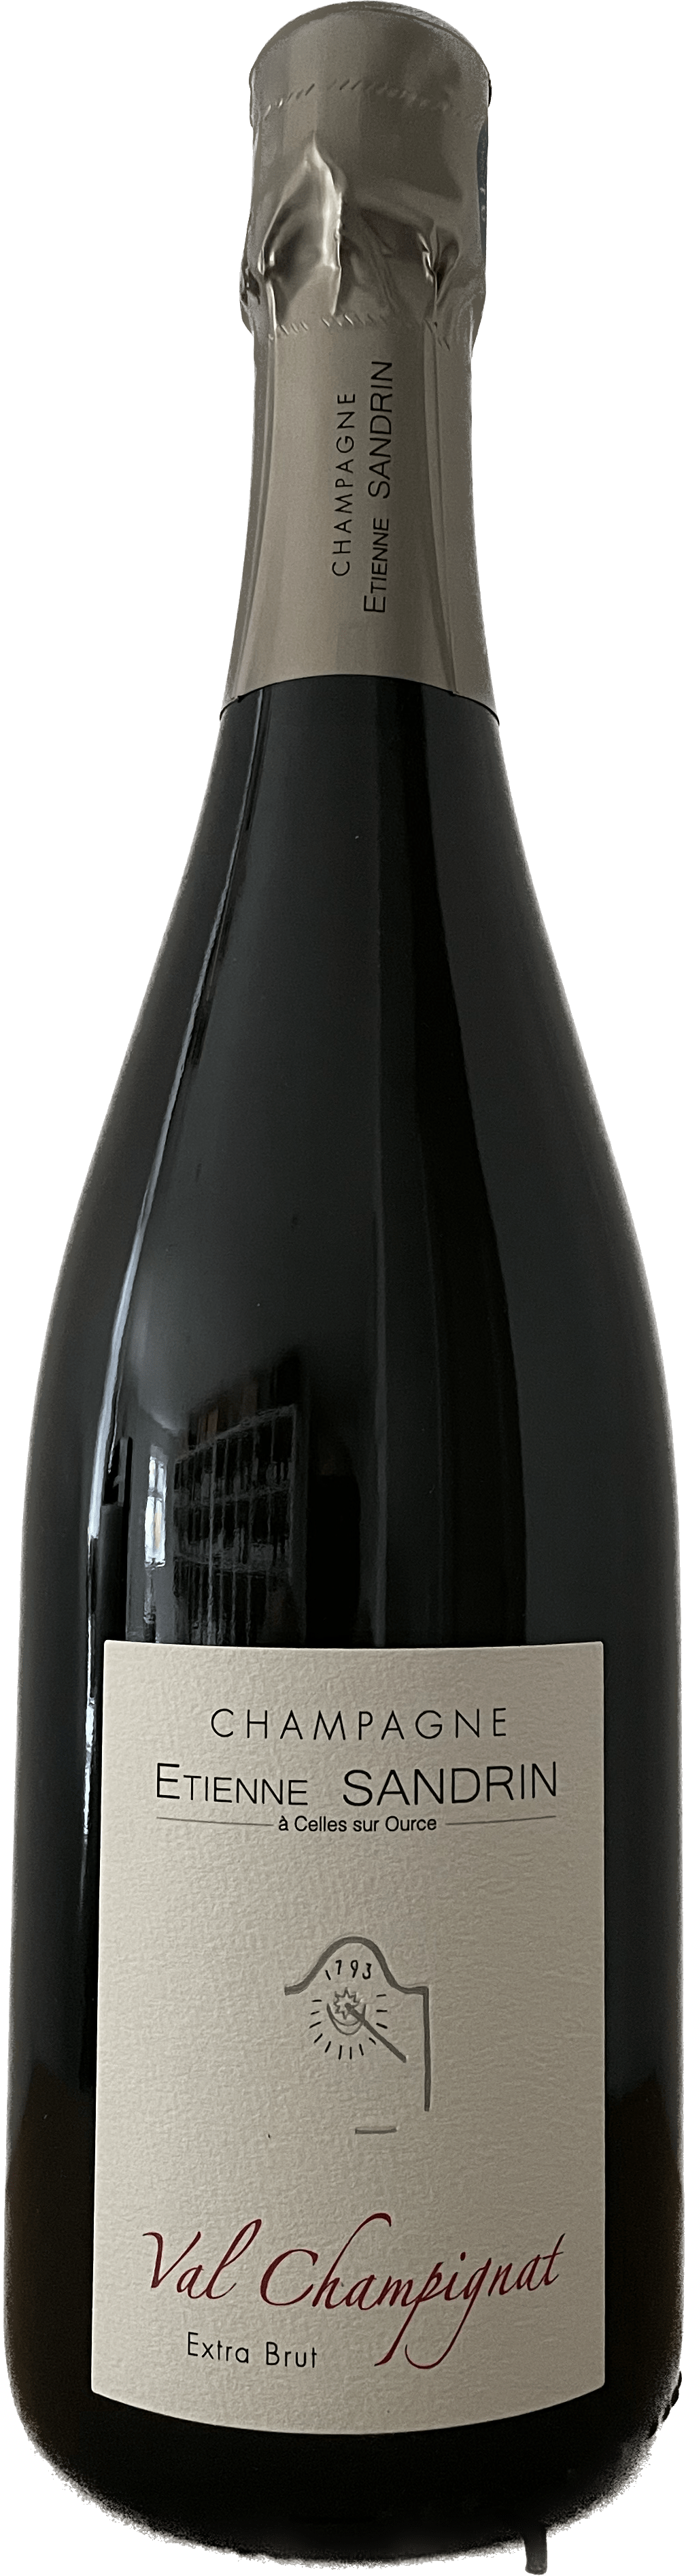 Champagne Etienne Sandrin Val Champignat 2019